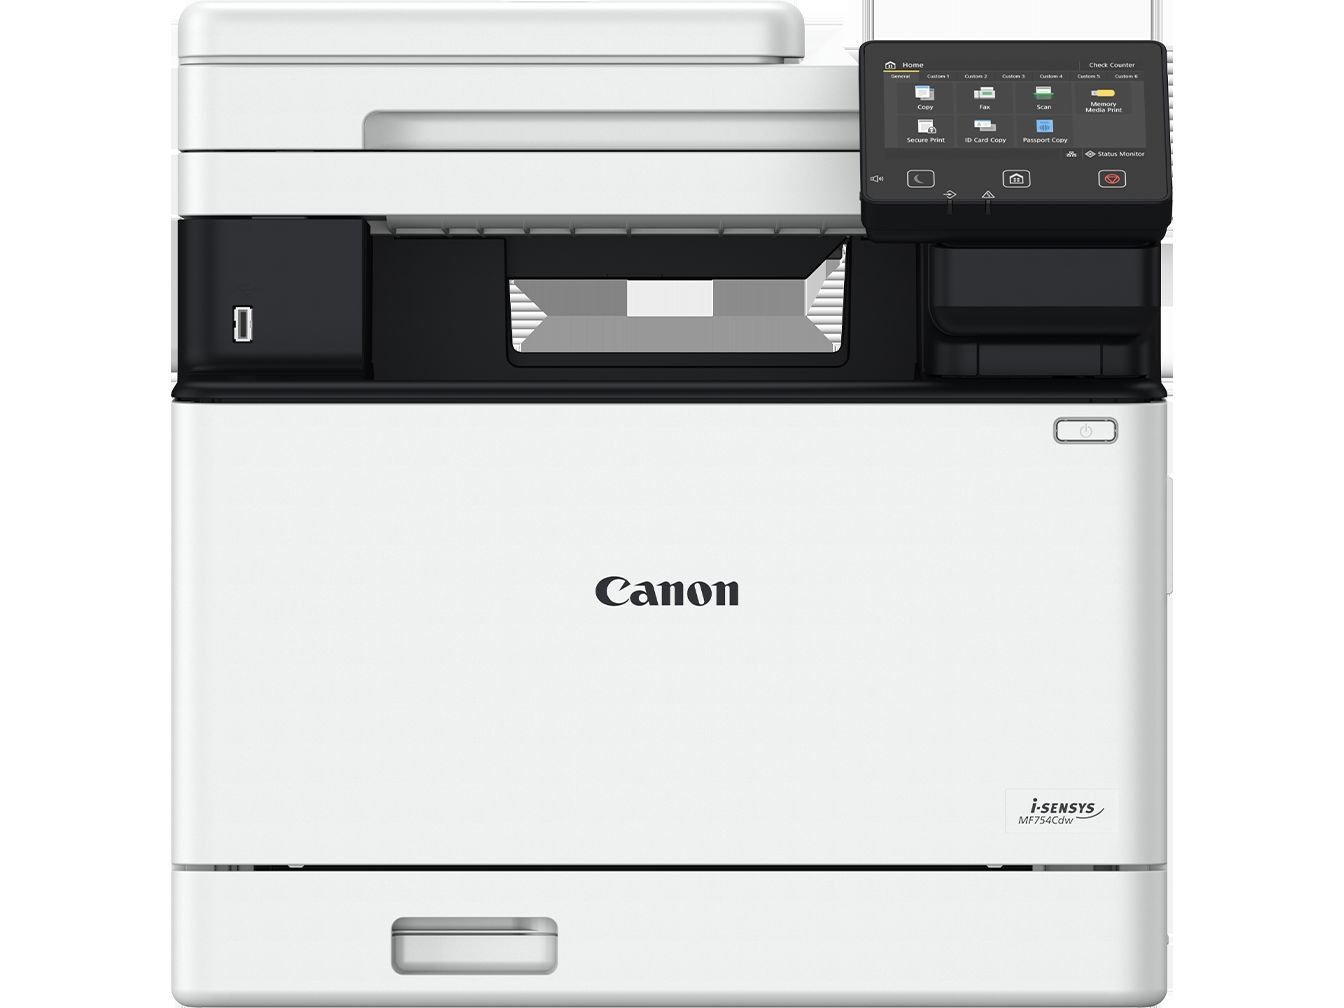 Daugiafunkcis spausdintuvas Canon i-SENSYS MF754Cdw, lazerinis, spalvotas - 1